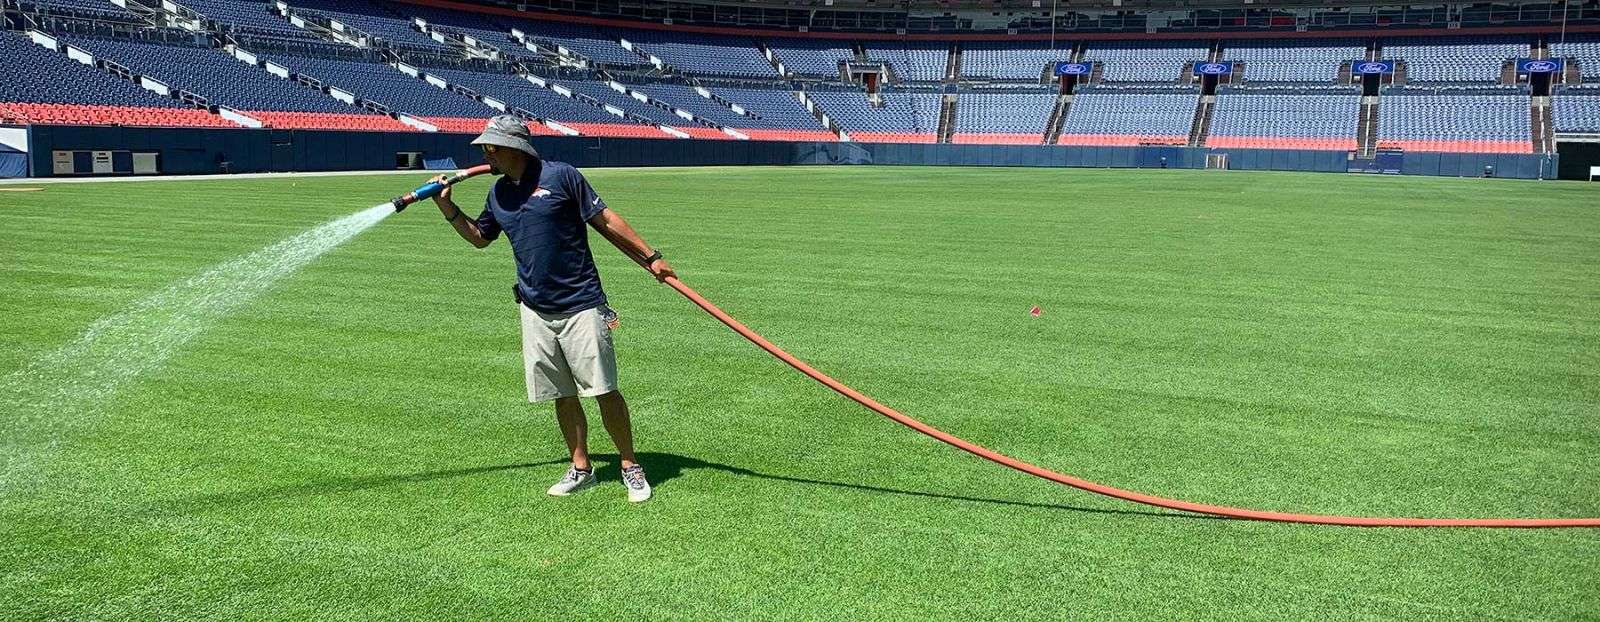 Denver stadium being watered by employee